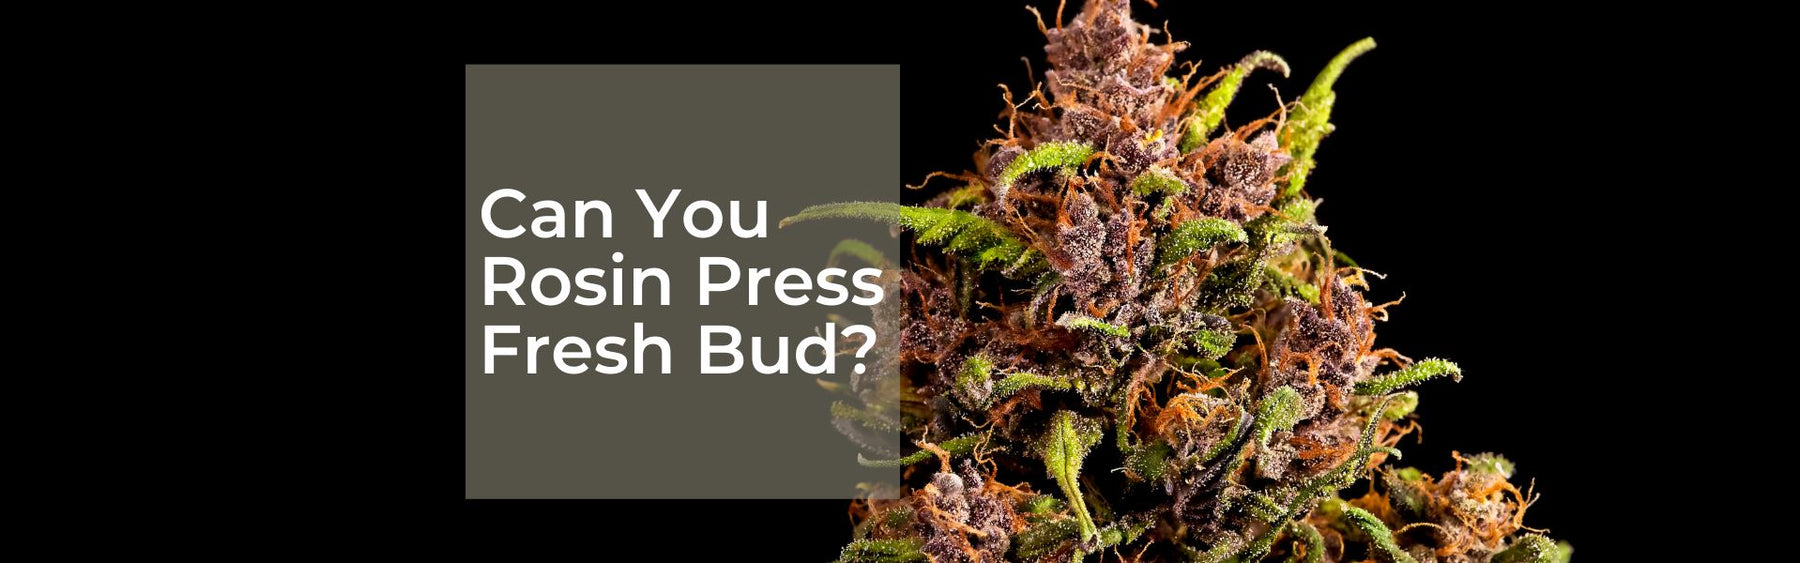 Can You Rosin Press Fresh Bud